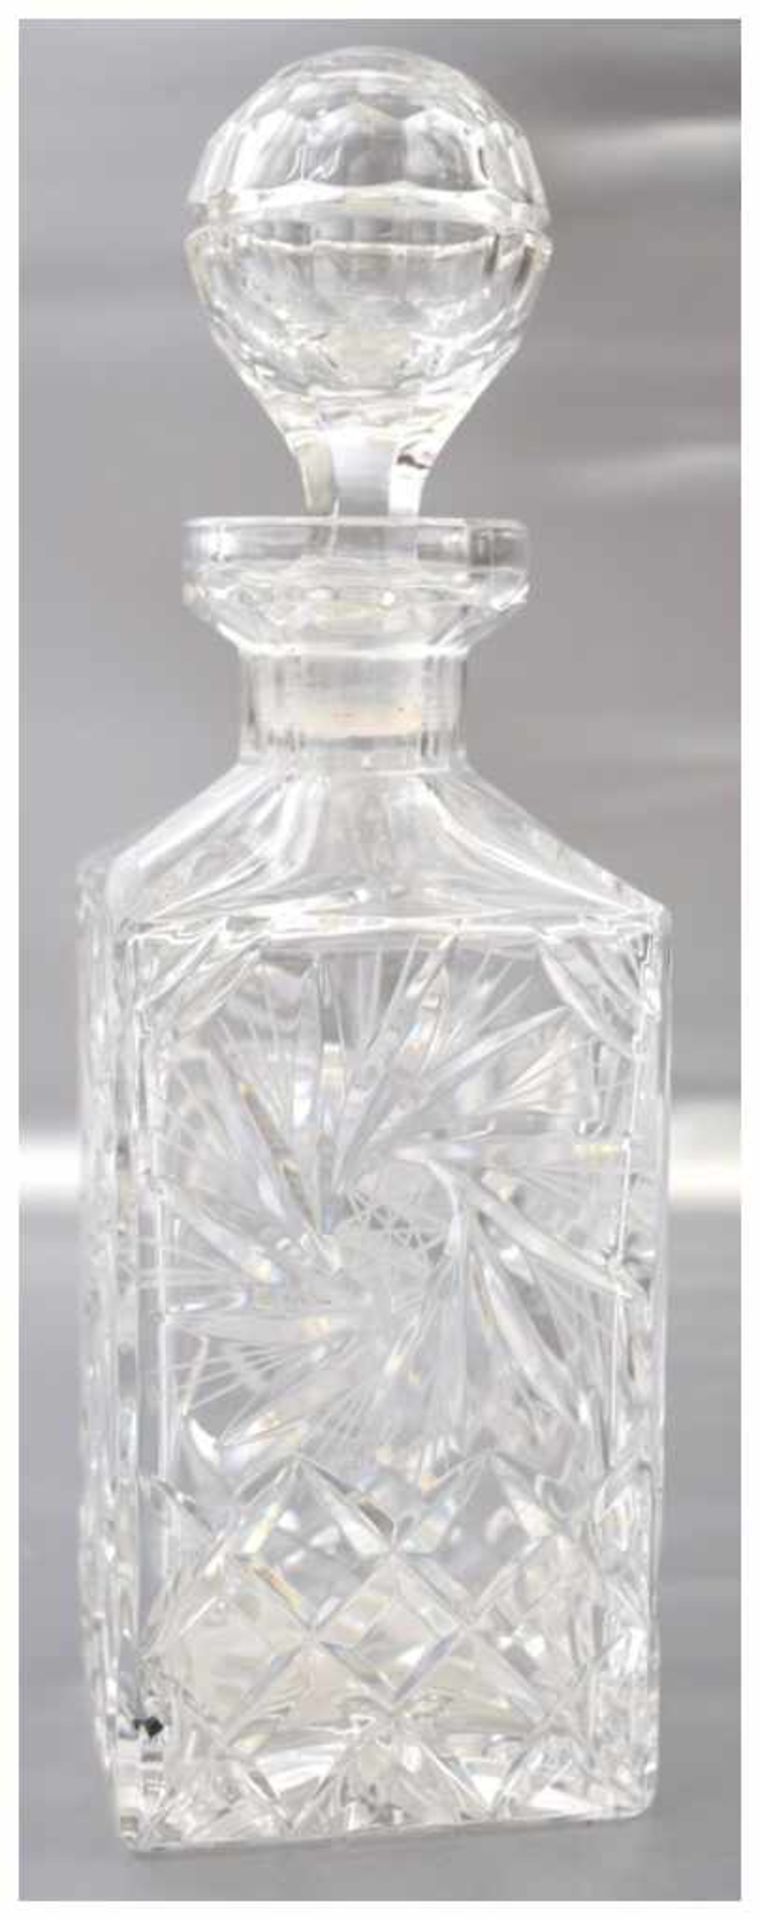 Karaffe farbl. Kristallglas, geschliffen verziert, mit Stöpsel, H 29 cm